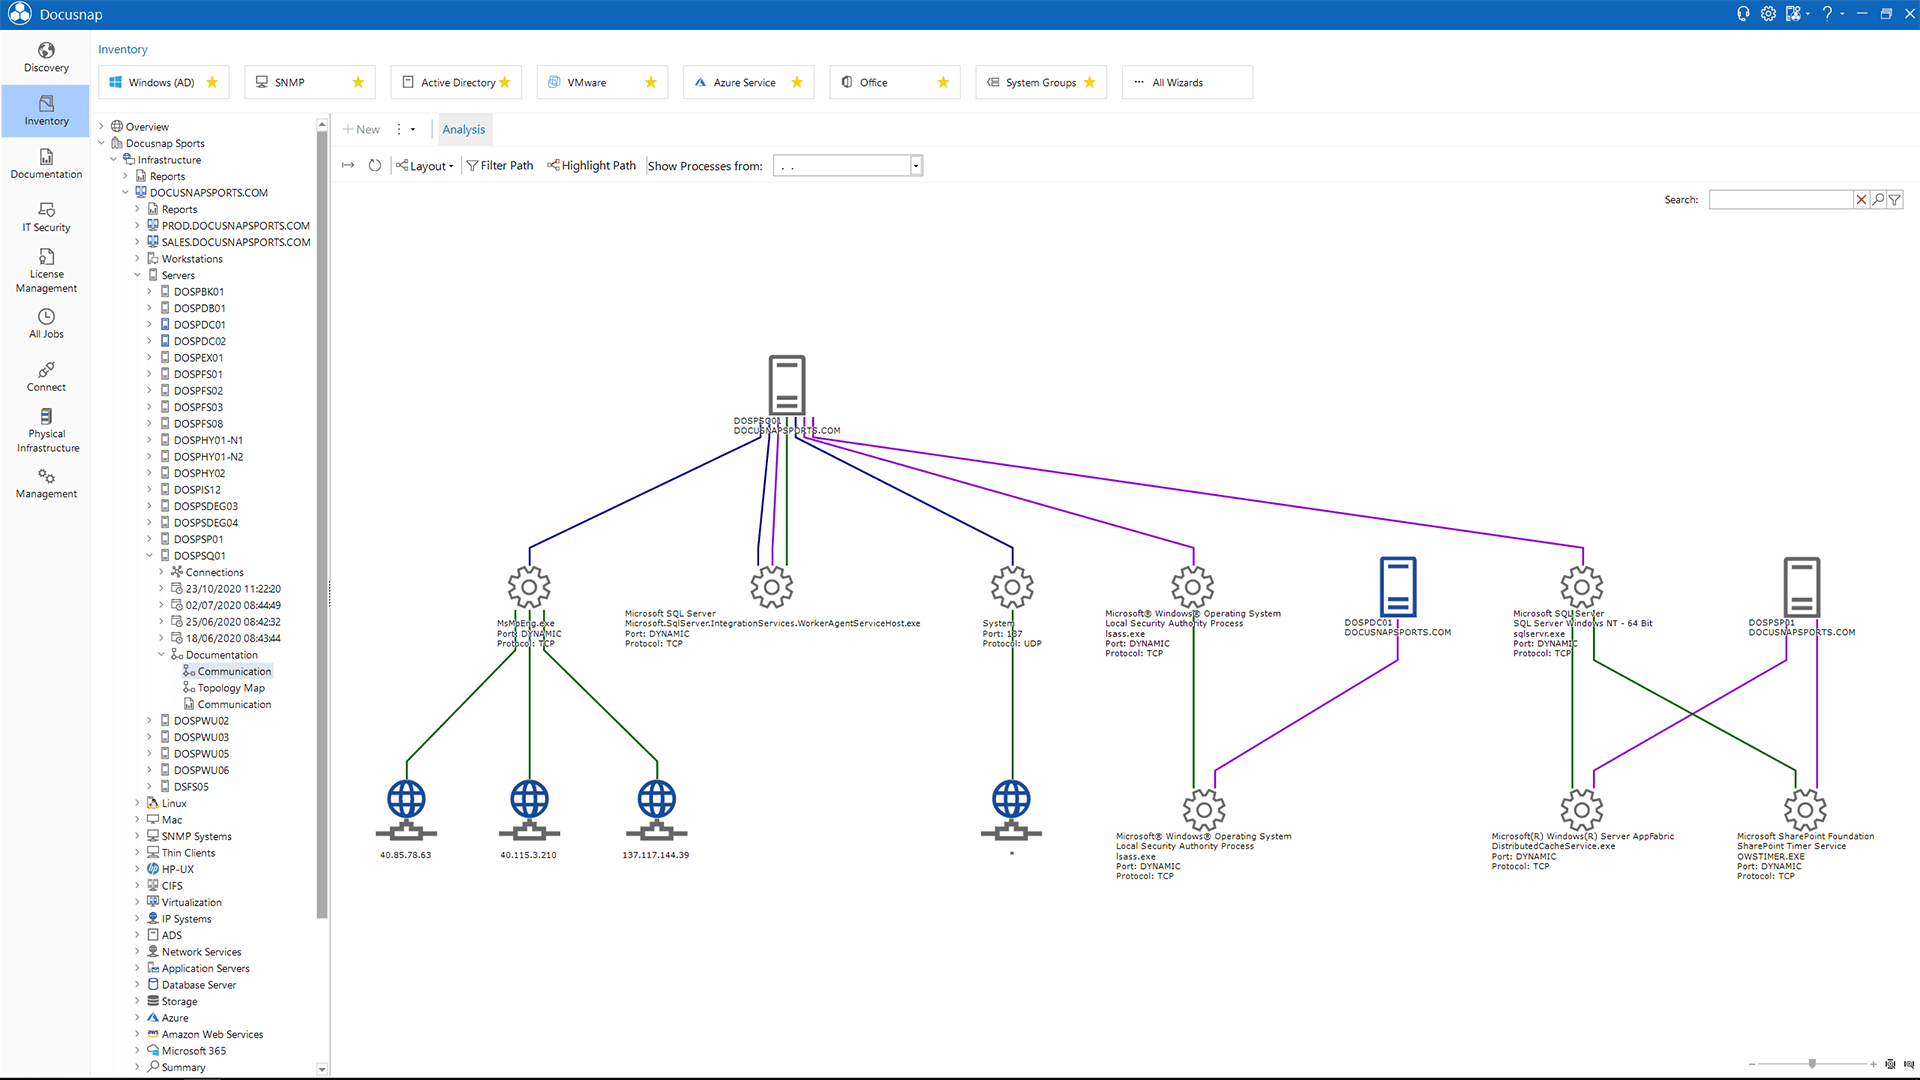 Screenshot: Analysis of dependencies based on communication paths